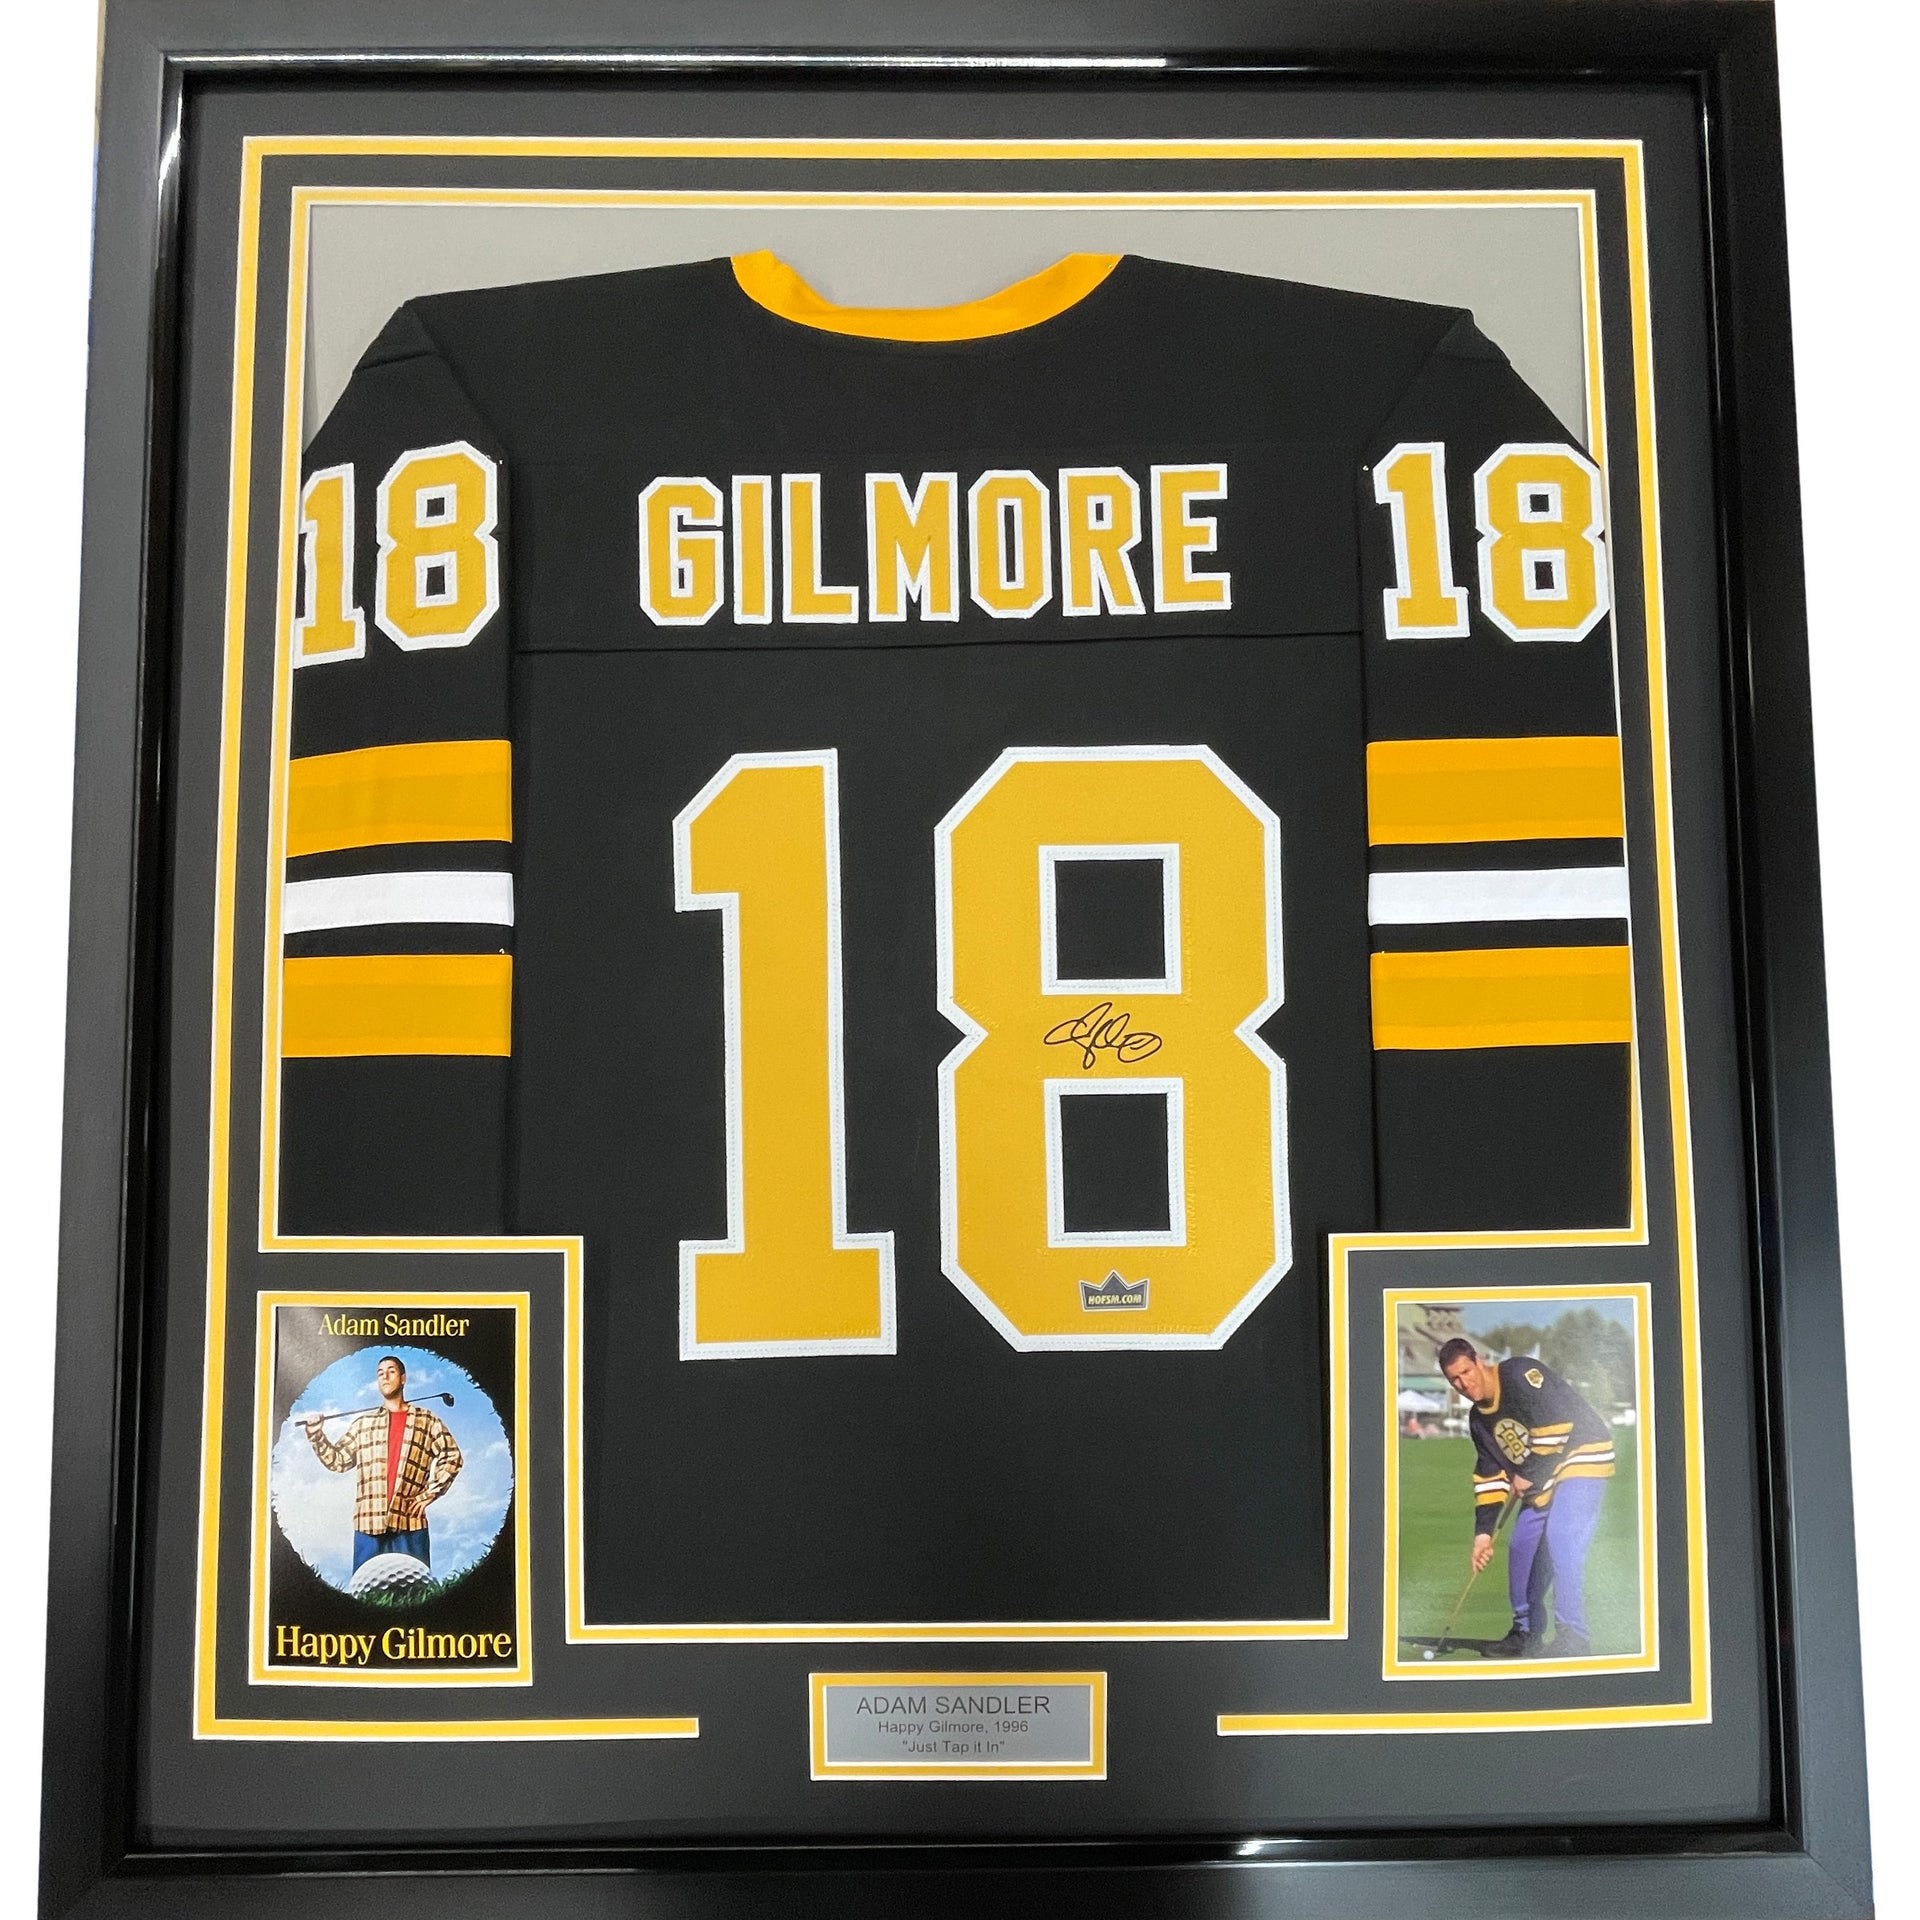  18 Happy Gilmore Hockey Jersey for Men,Boston Adam